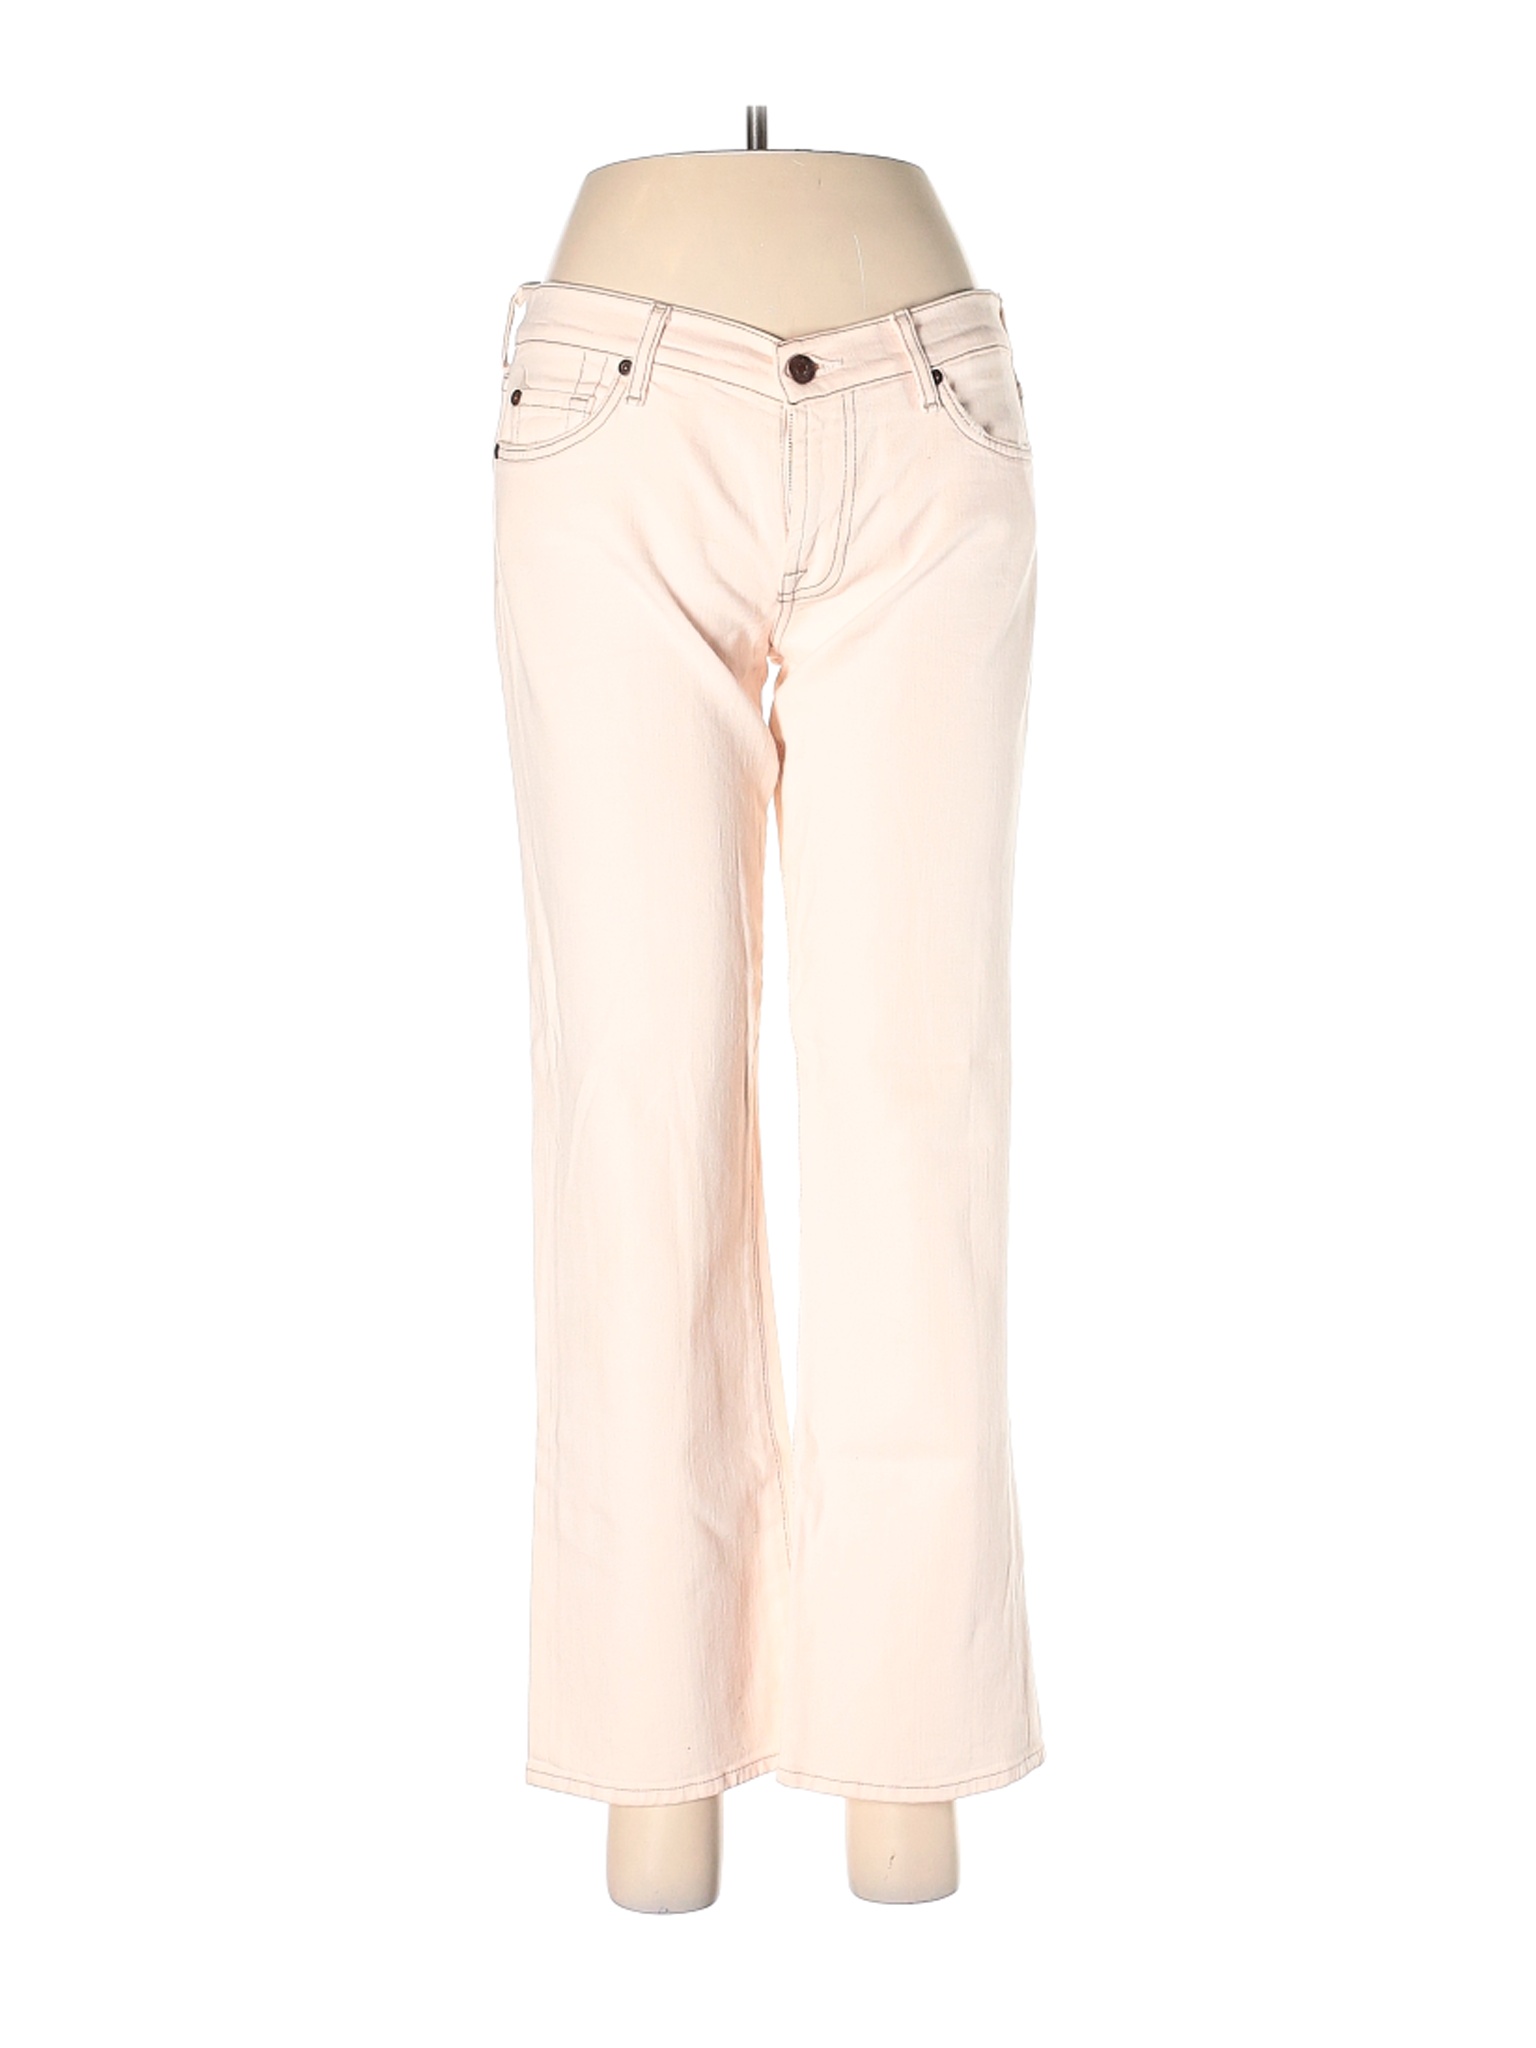 7 For All Mankind Women Ivory Jeans 29W | eBay